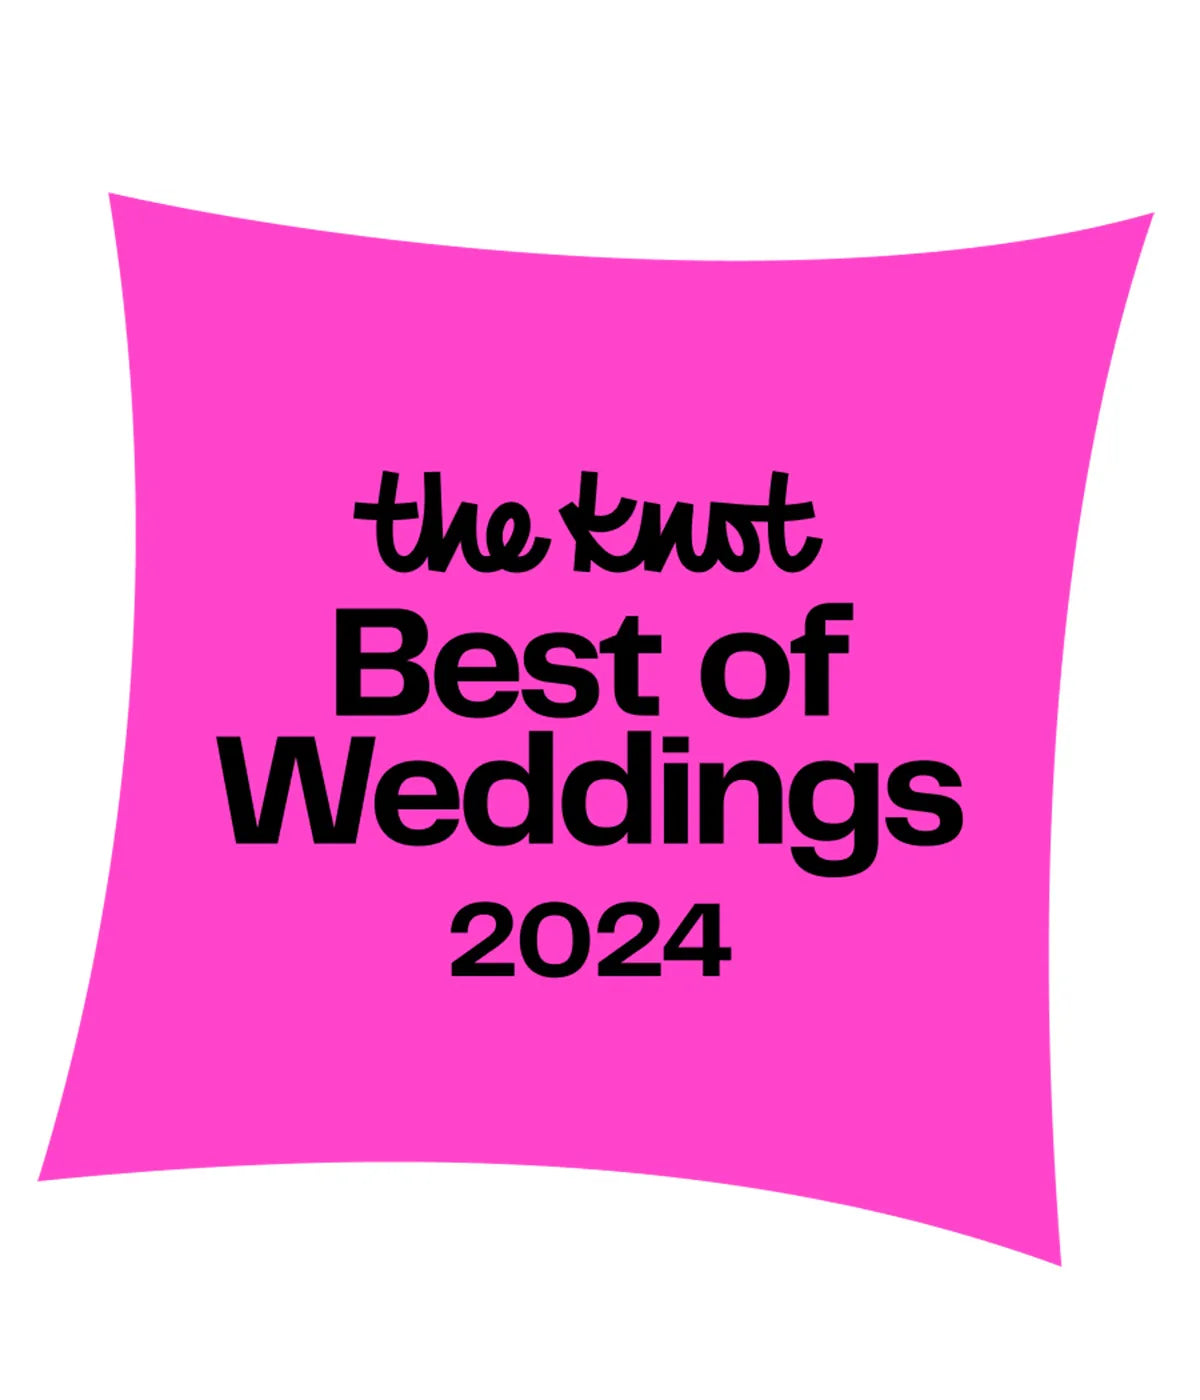 Sparklers For Wedding Award in 2024